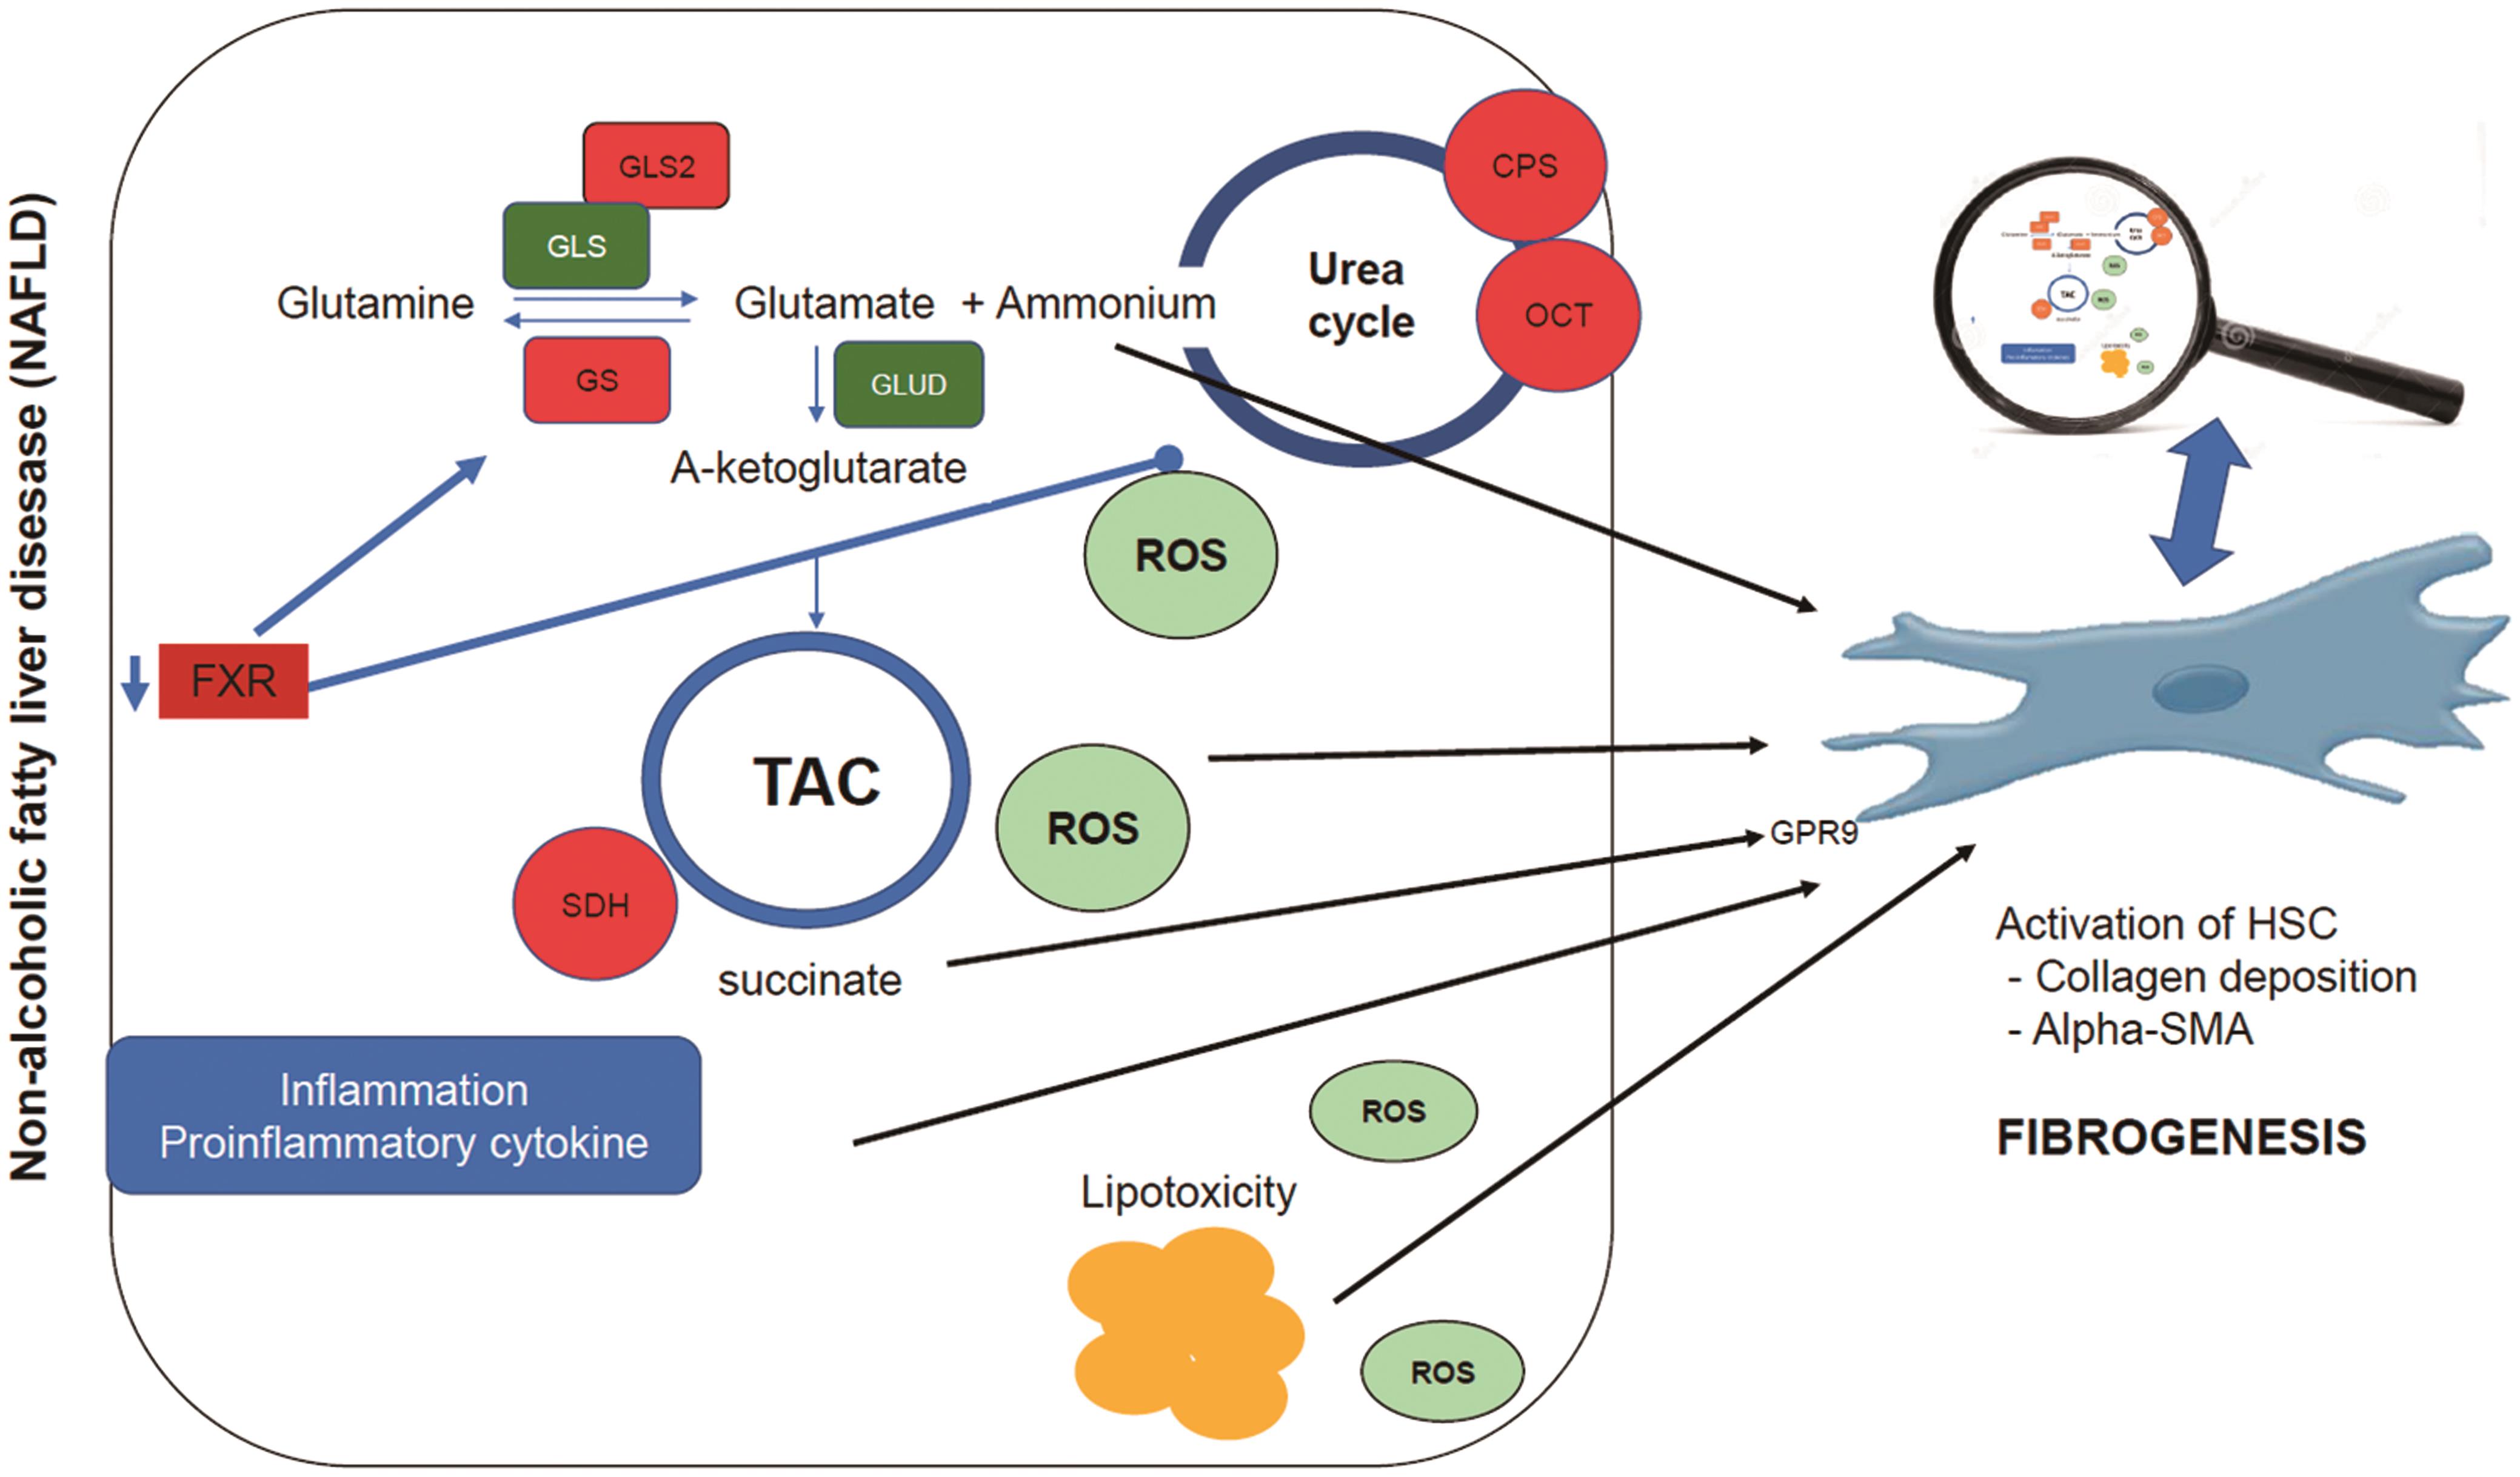 Glutamine metabolism pathway and its association with NASH-fibrogenesis.